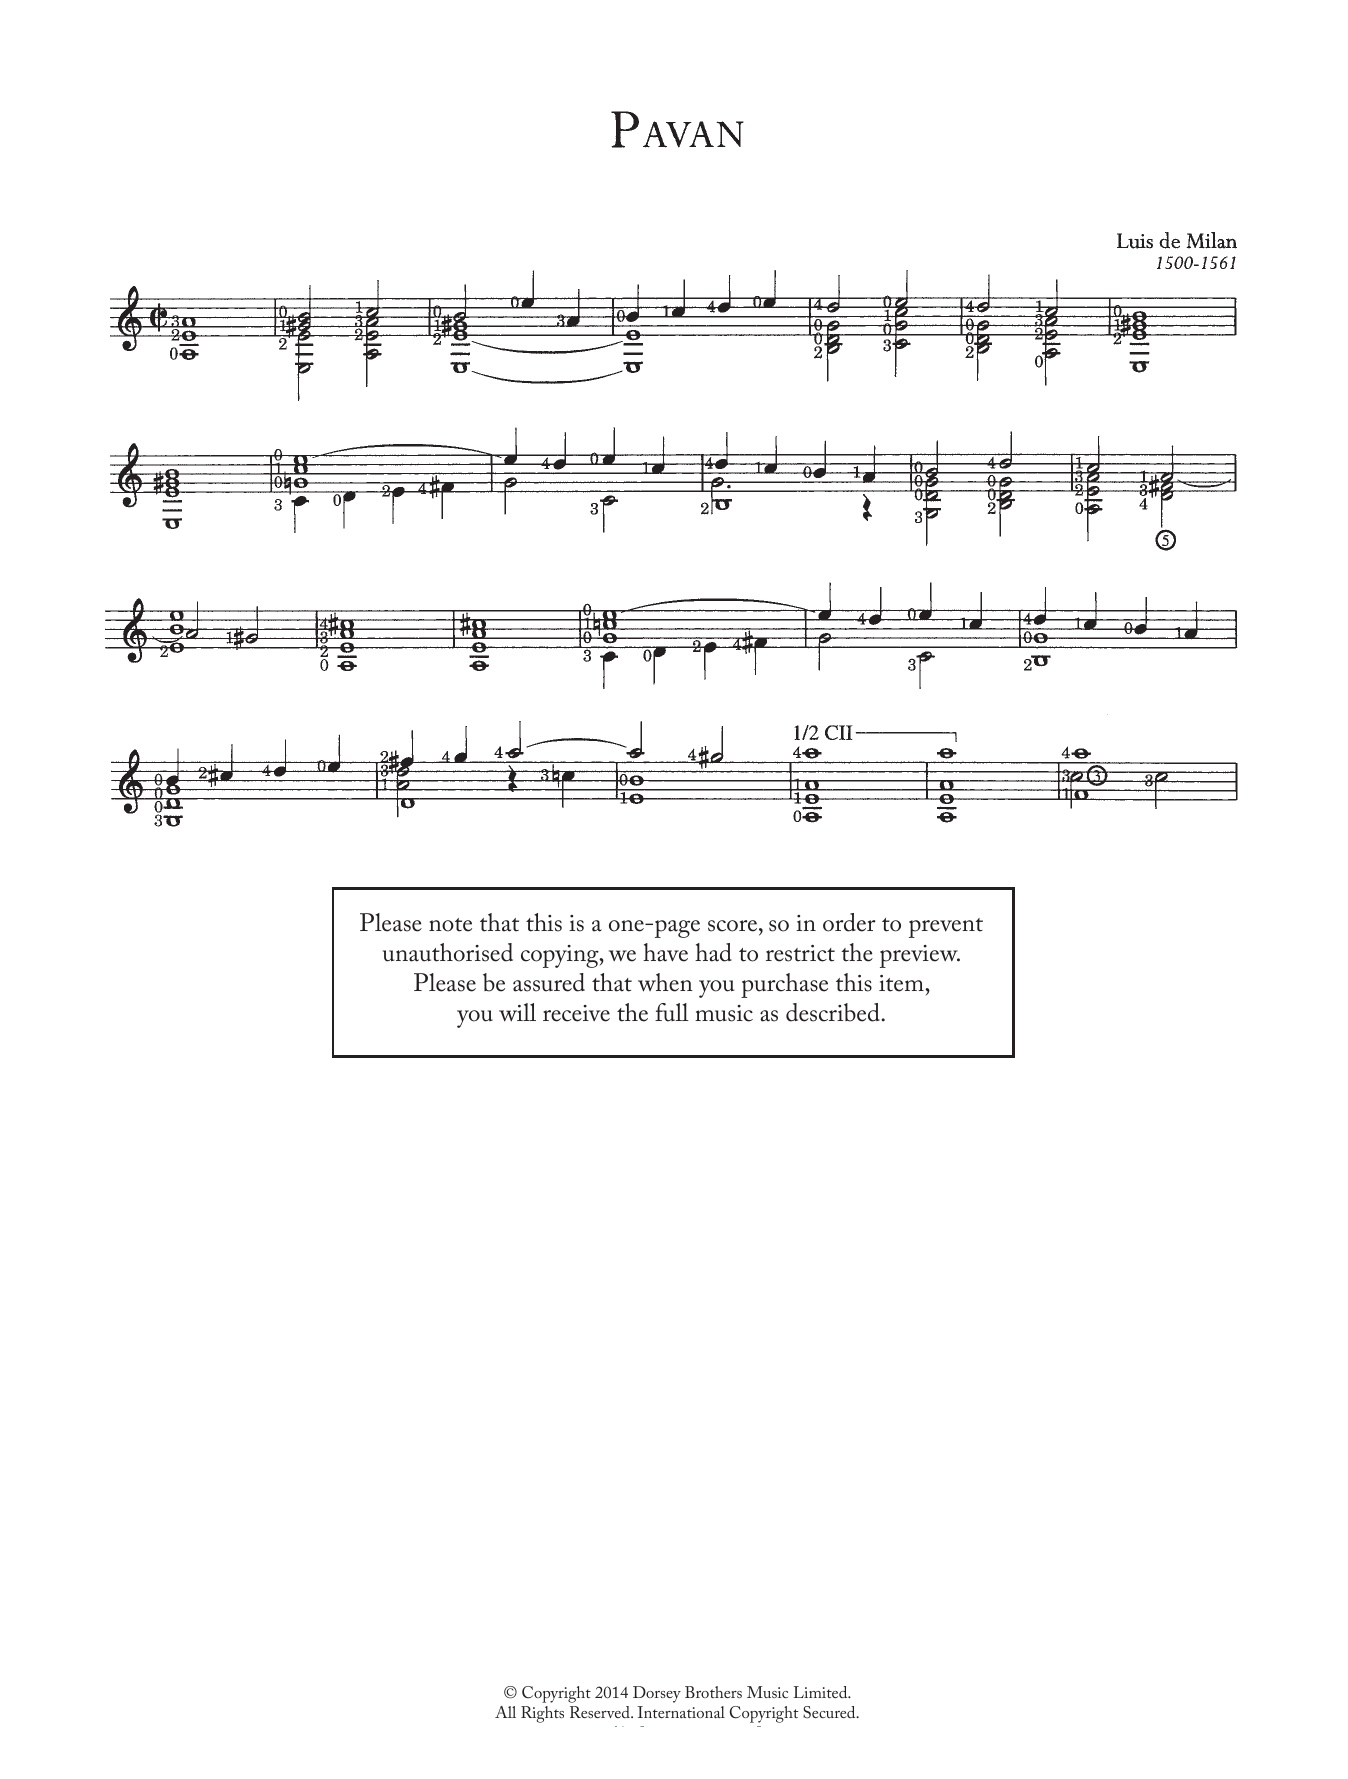 Luis de Milán Pavane No. 1 sheet music notes and chords arranged for Solo Guitar